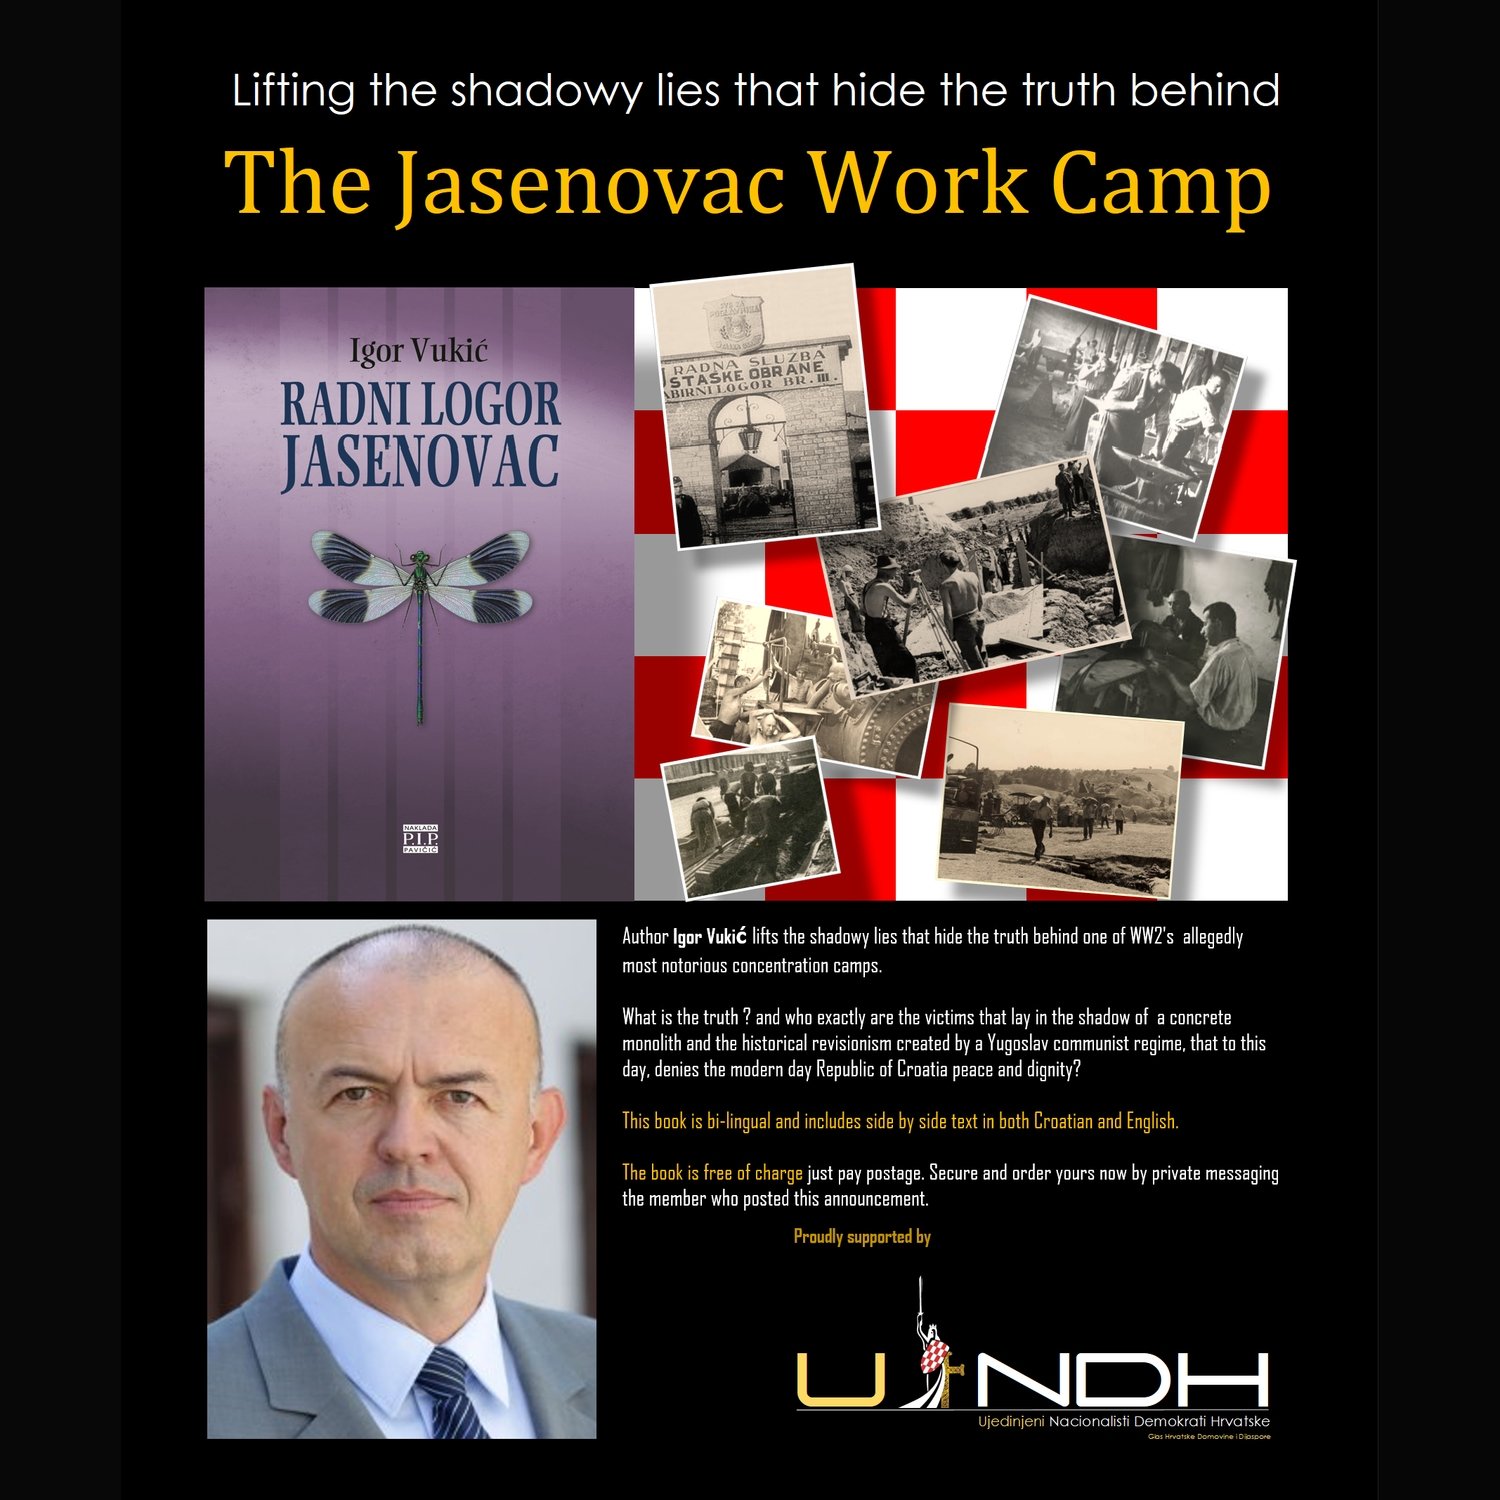 The Jasenovac Work Camp by Igor Vukic